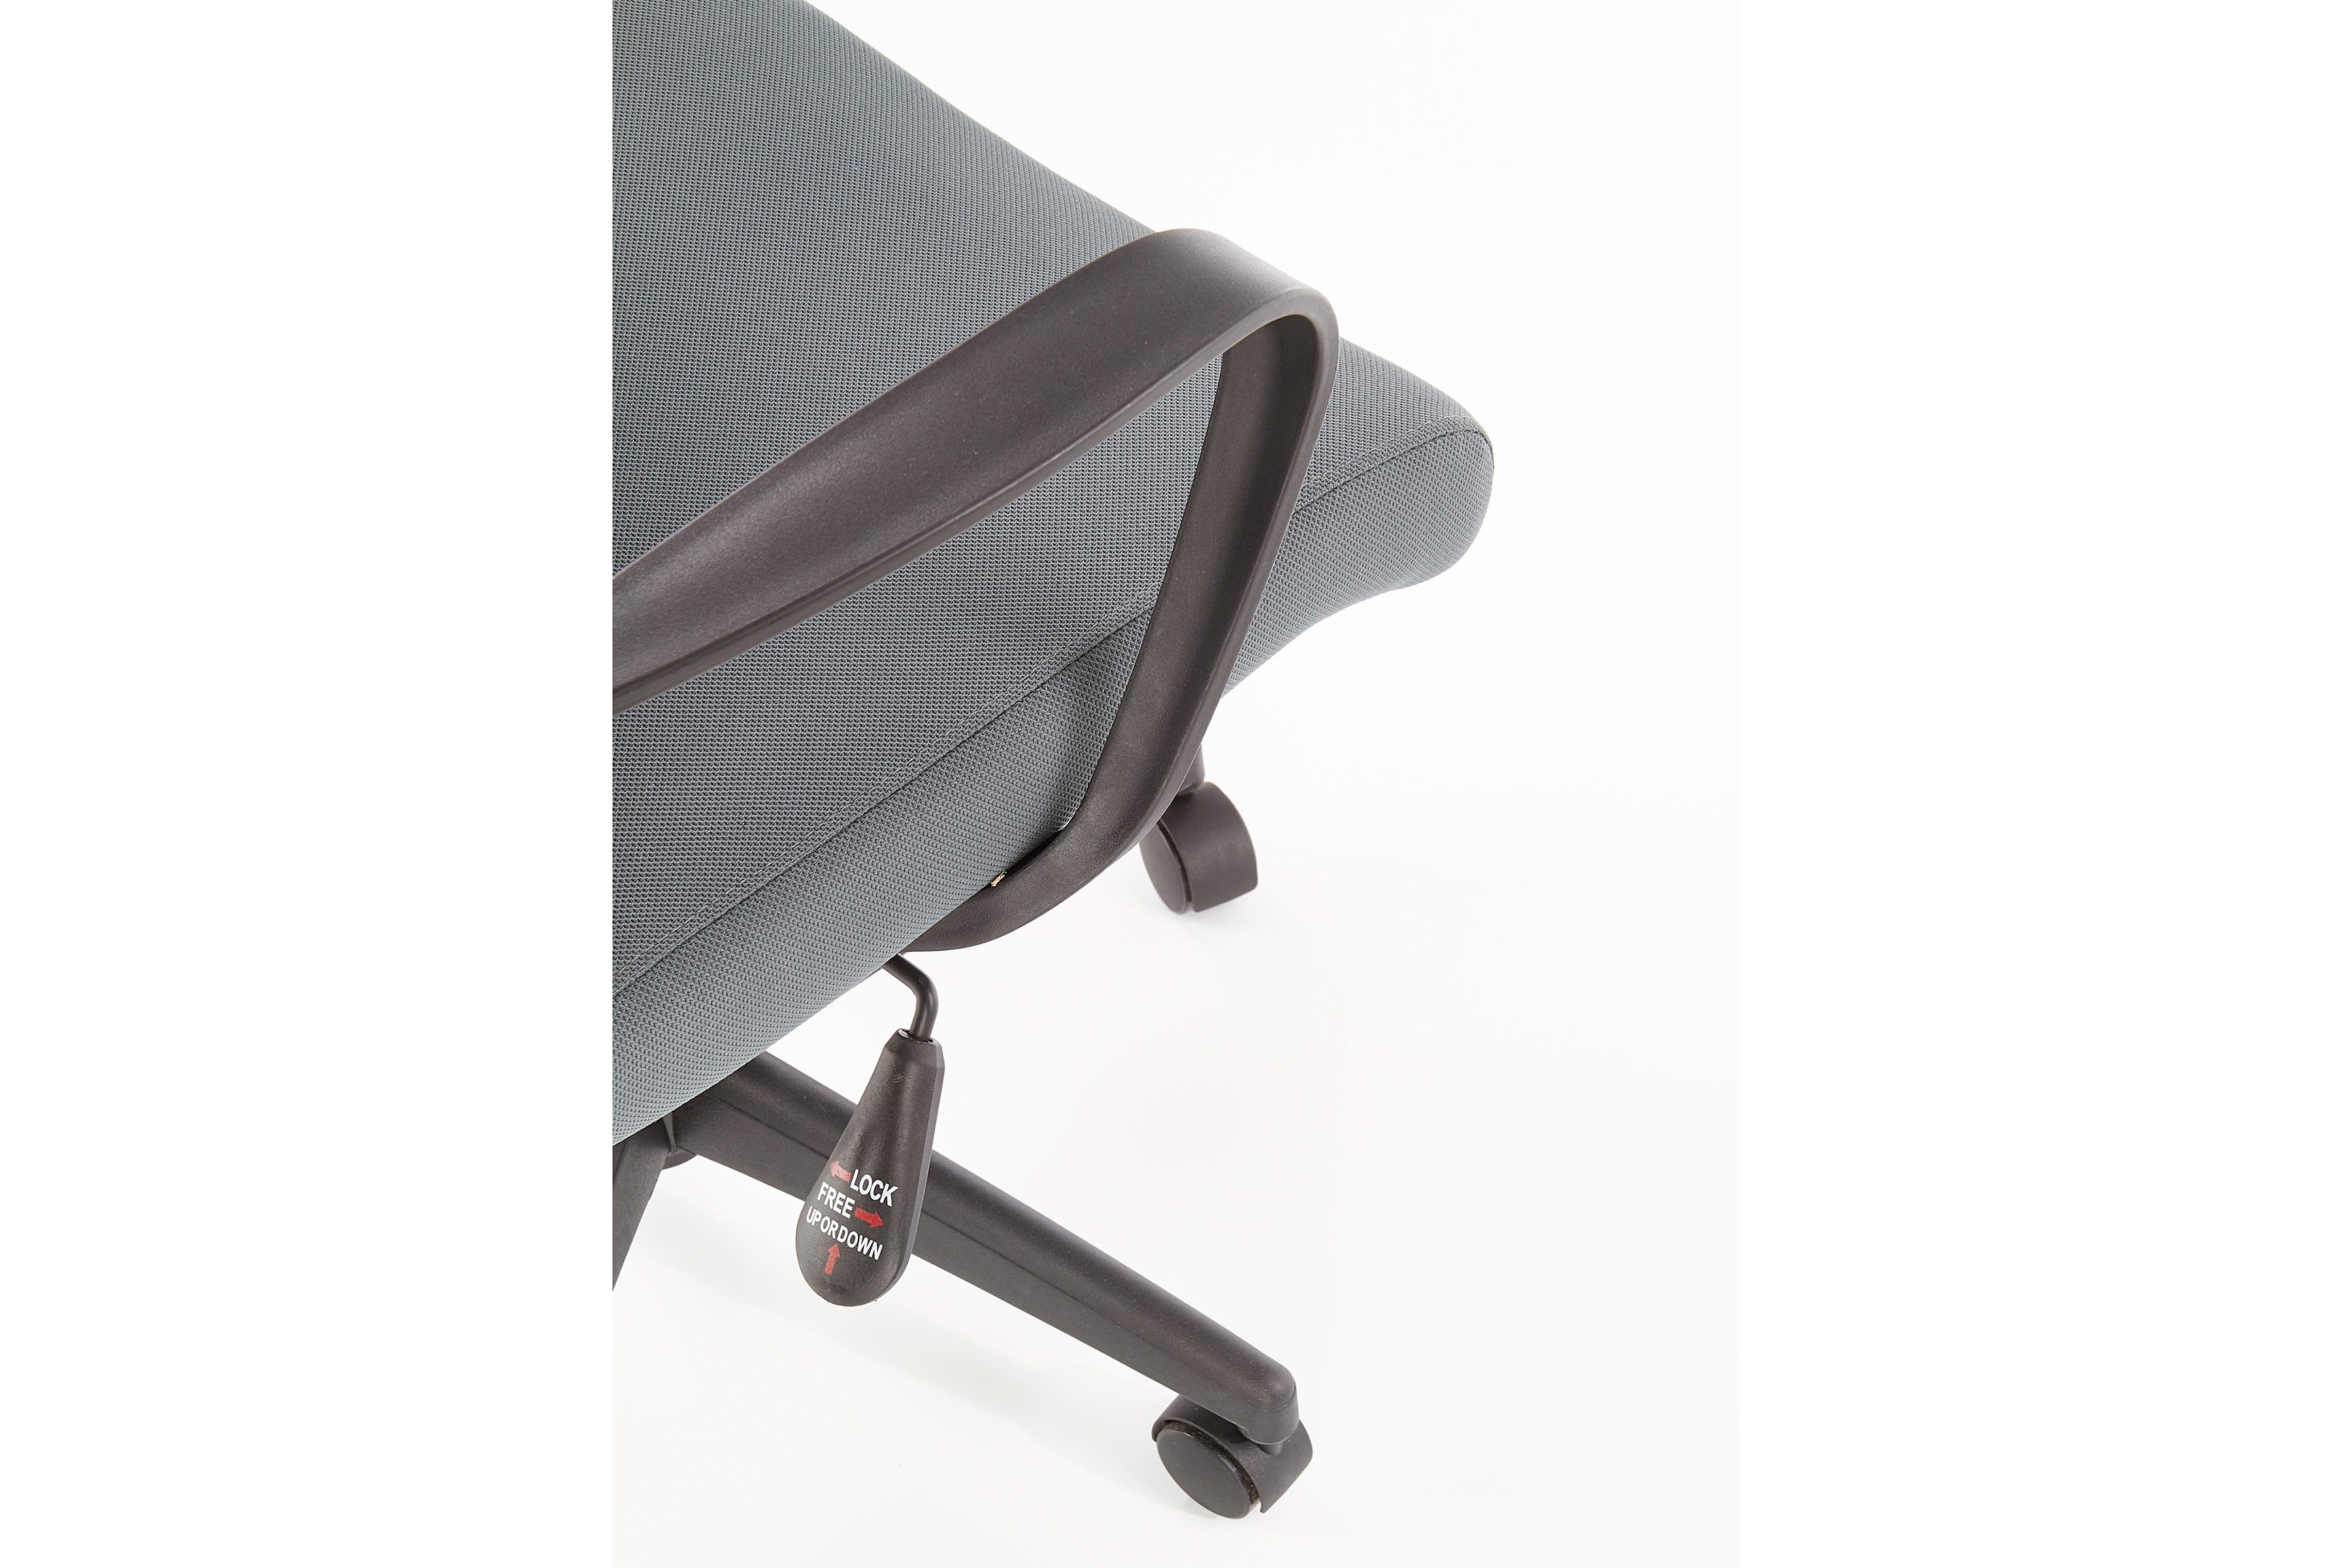 Fotel biurowy Arsen z rekulowanym podparciem pleców - popiel Fotel biurowy Arsen z rekulowanym podparciem pleców - popiel